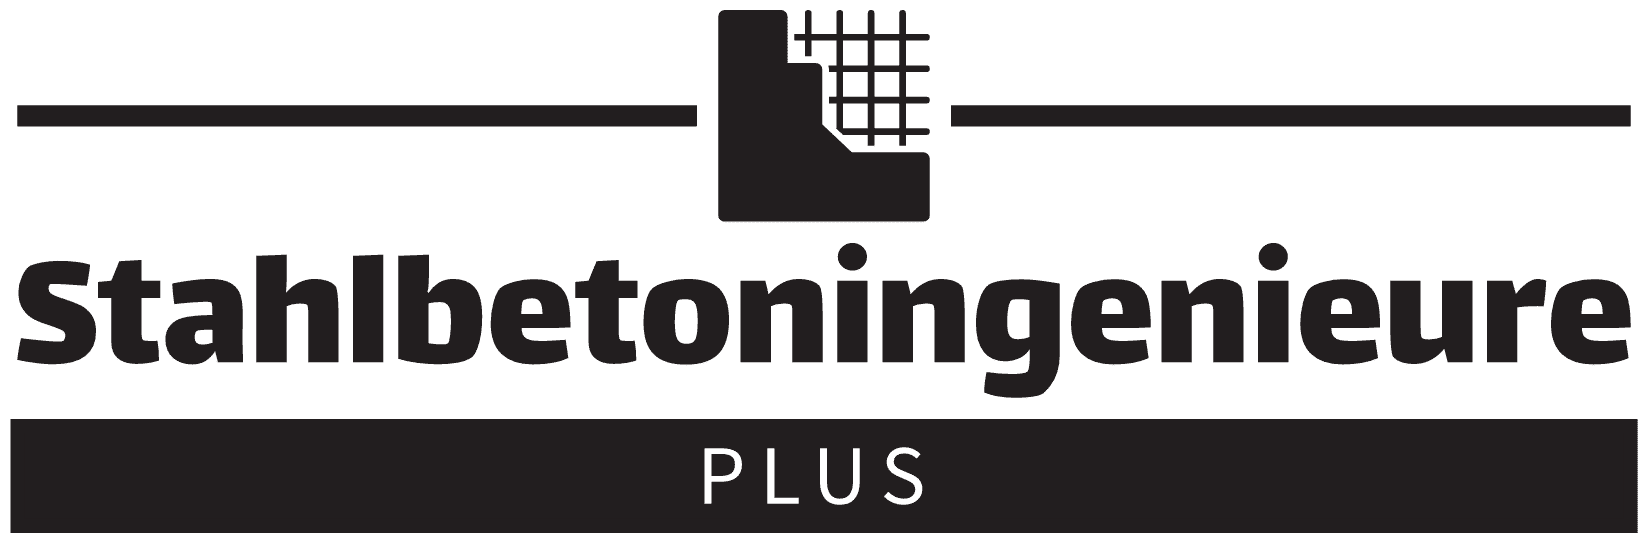 Stahlbetoningenieure Main Logo Onlinebaugutachter